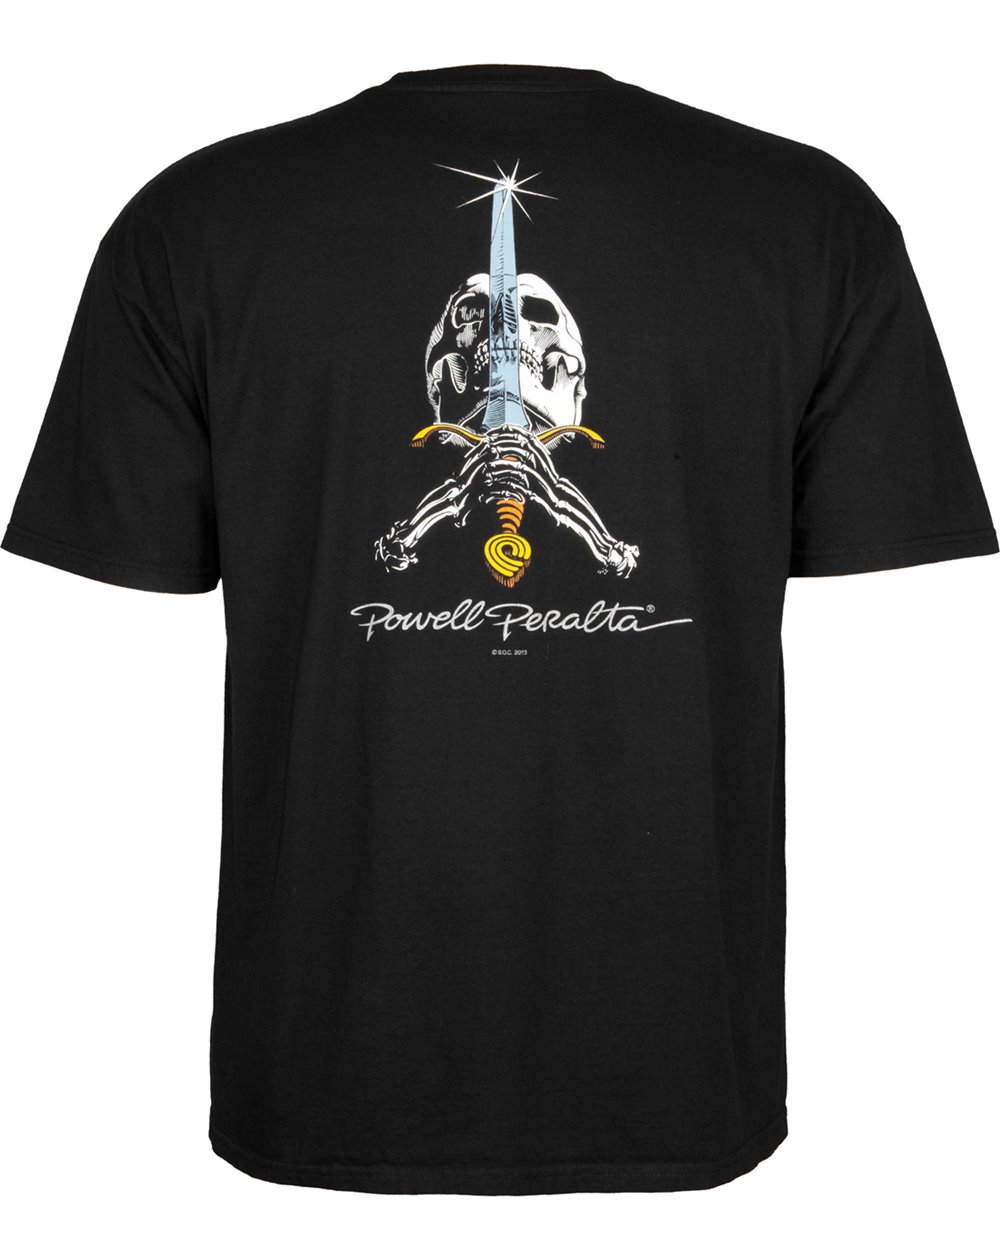 Powell Peralta Men's T-Shirt Skull and Sword Black